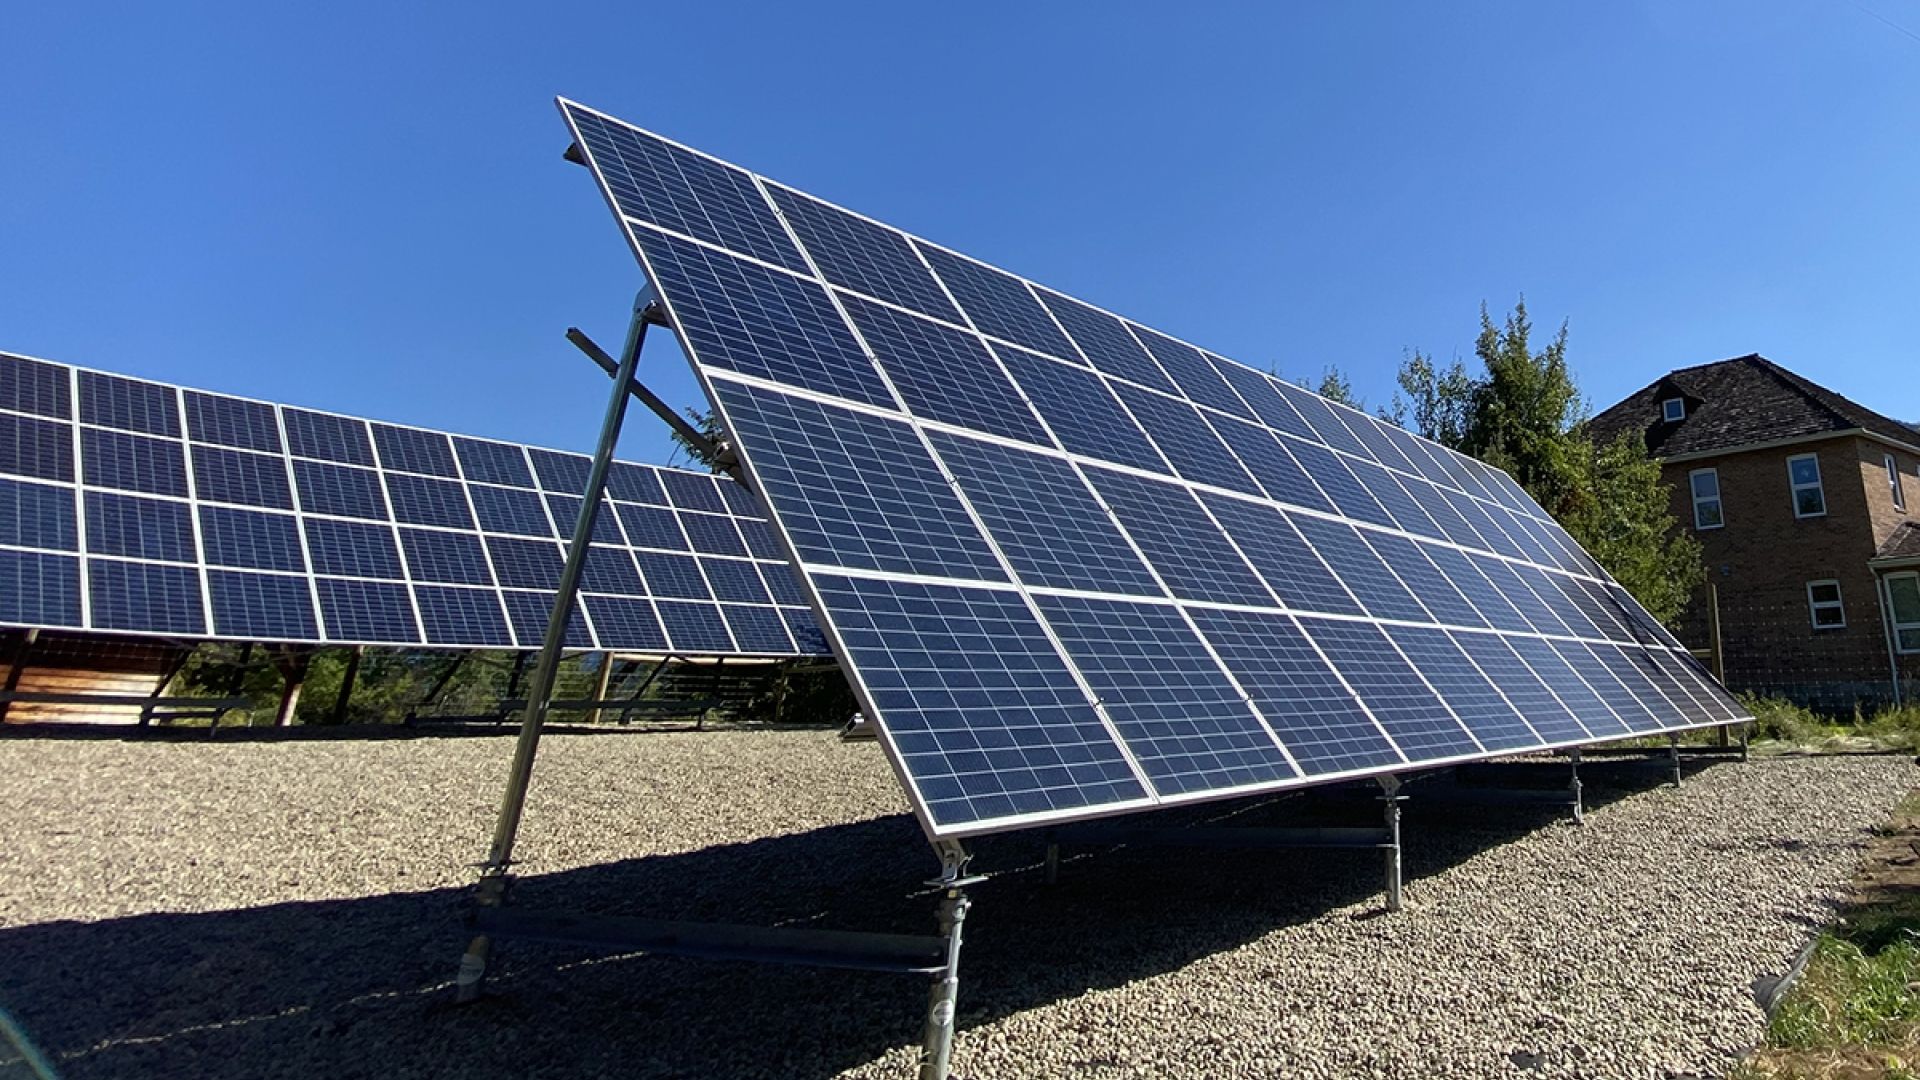 Solar panels at the Mir Centre for Peace, Castlegar Campus